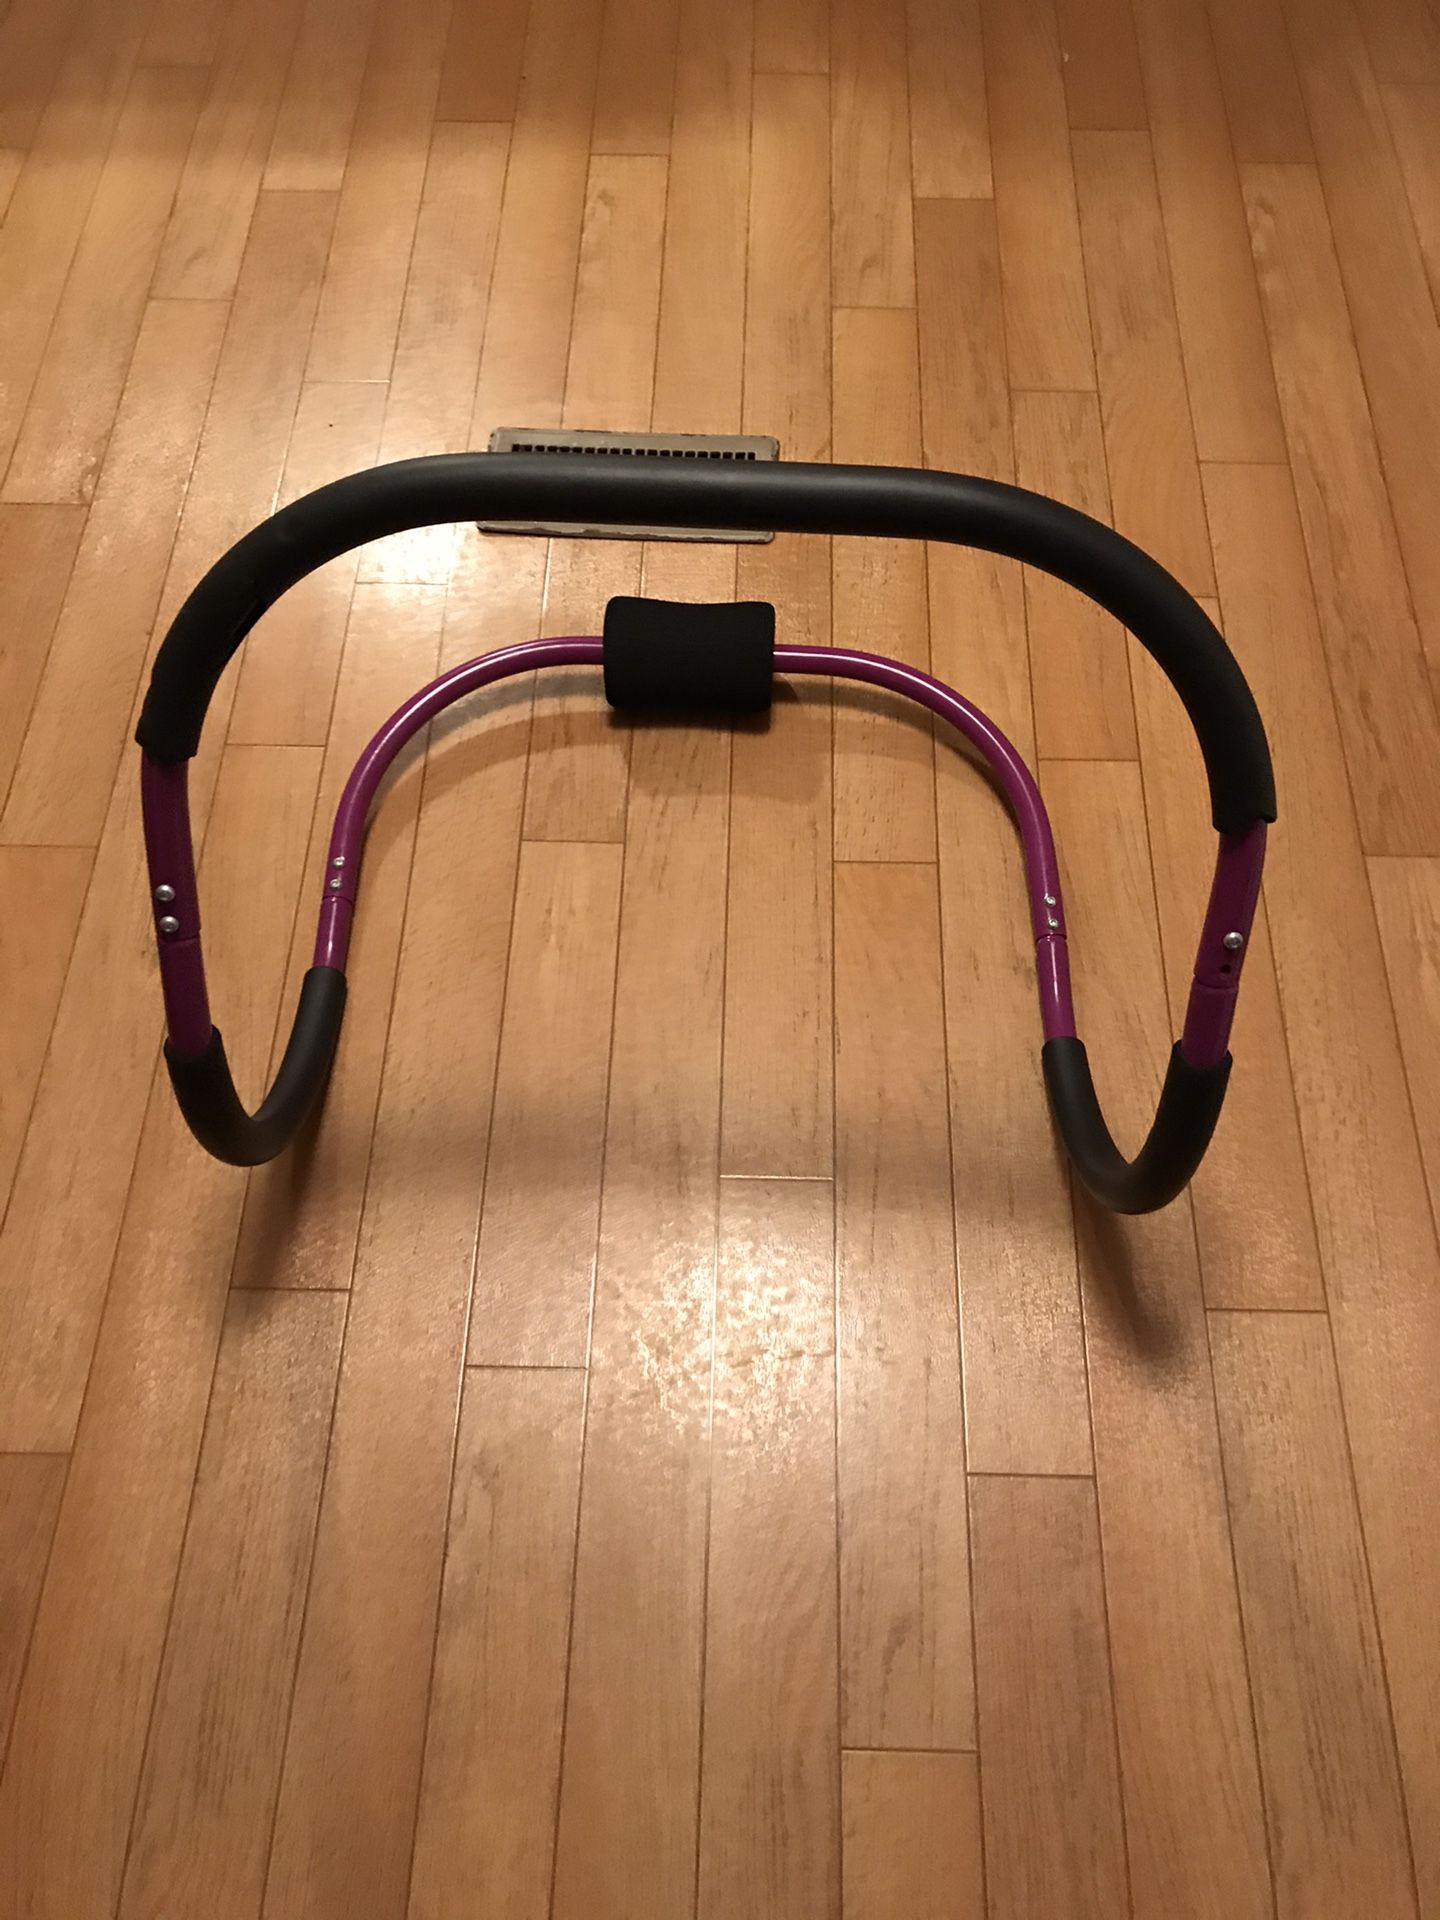 AB roller exercise equipment